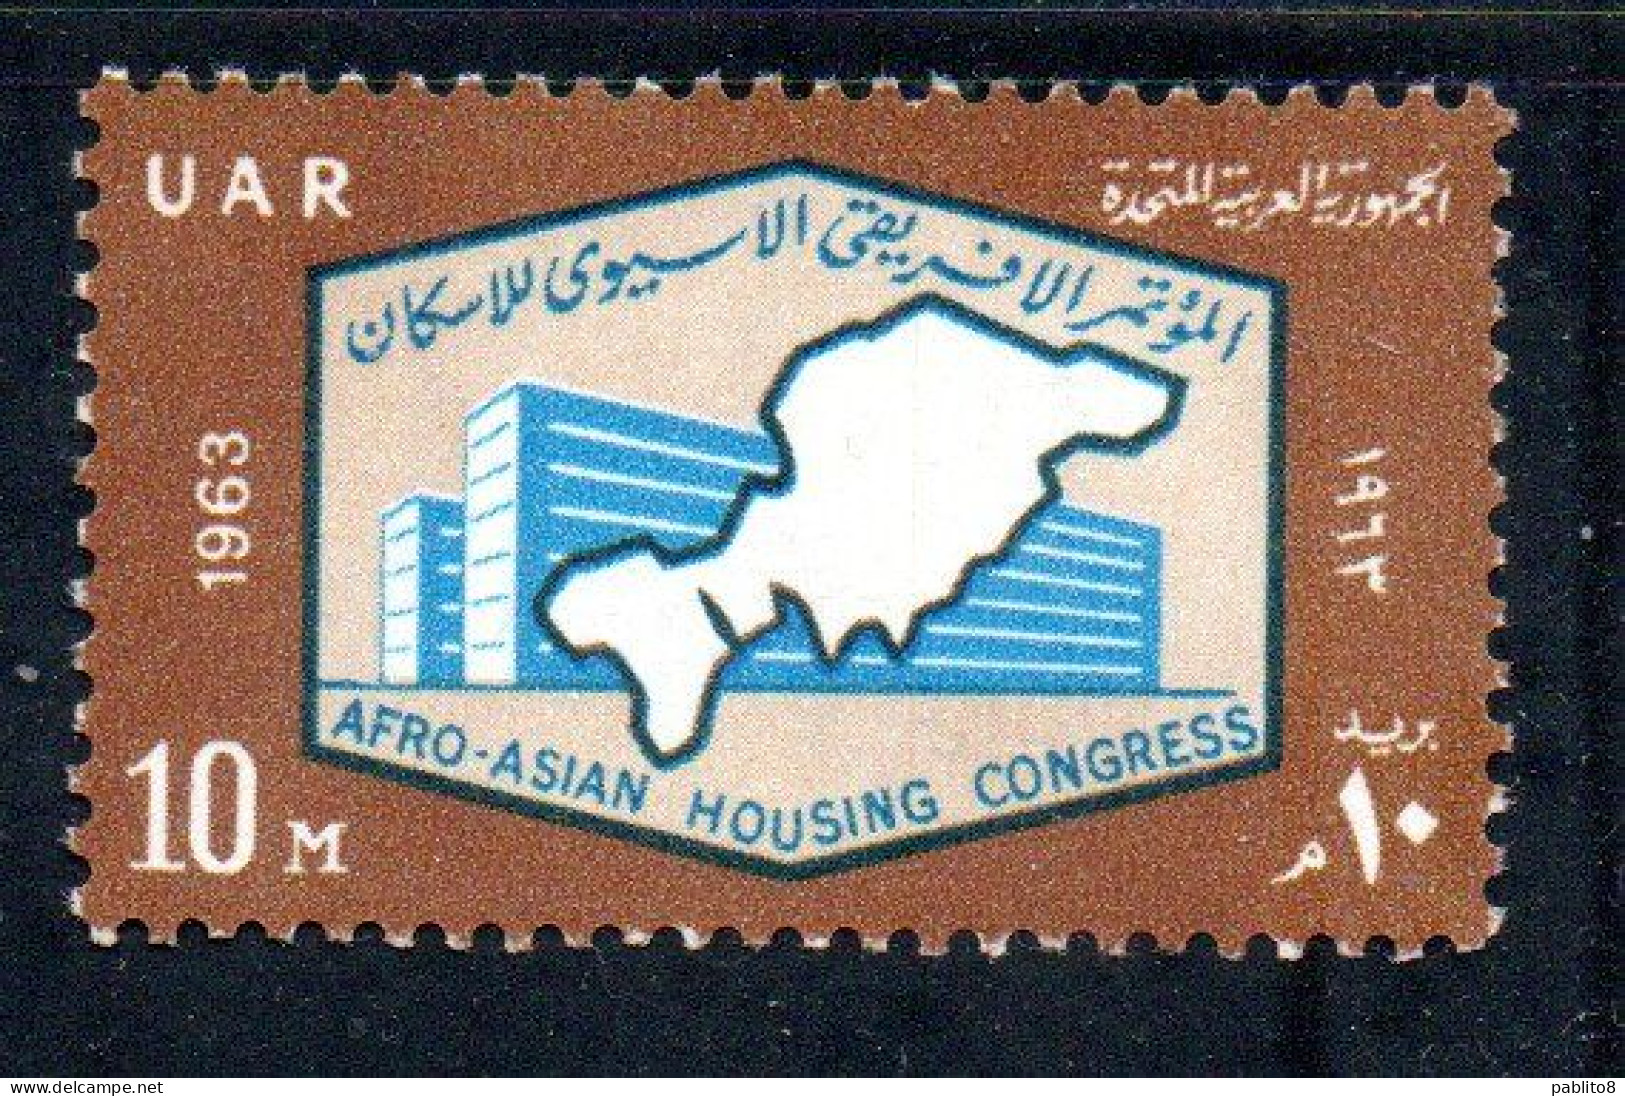 UAR EGYPT EGITTO 1963 AFRO-ASIAN HOUSING CONGRESS MODERN BUILDING AND MAP 10m MNH - Nuovi